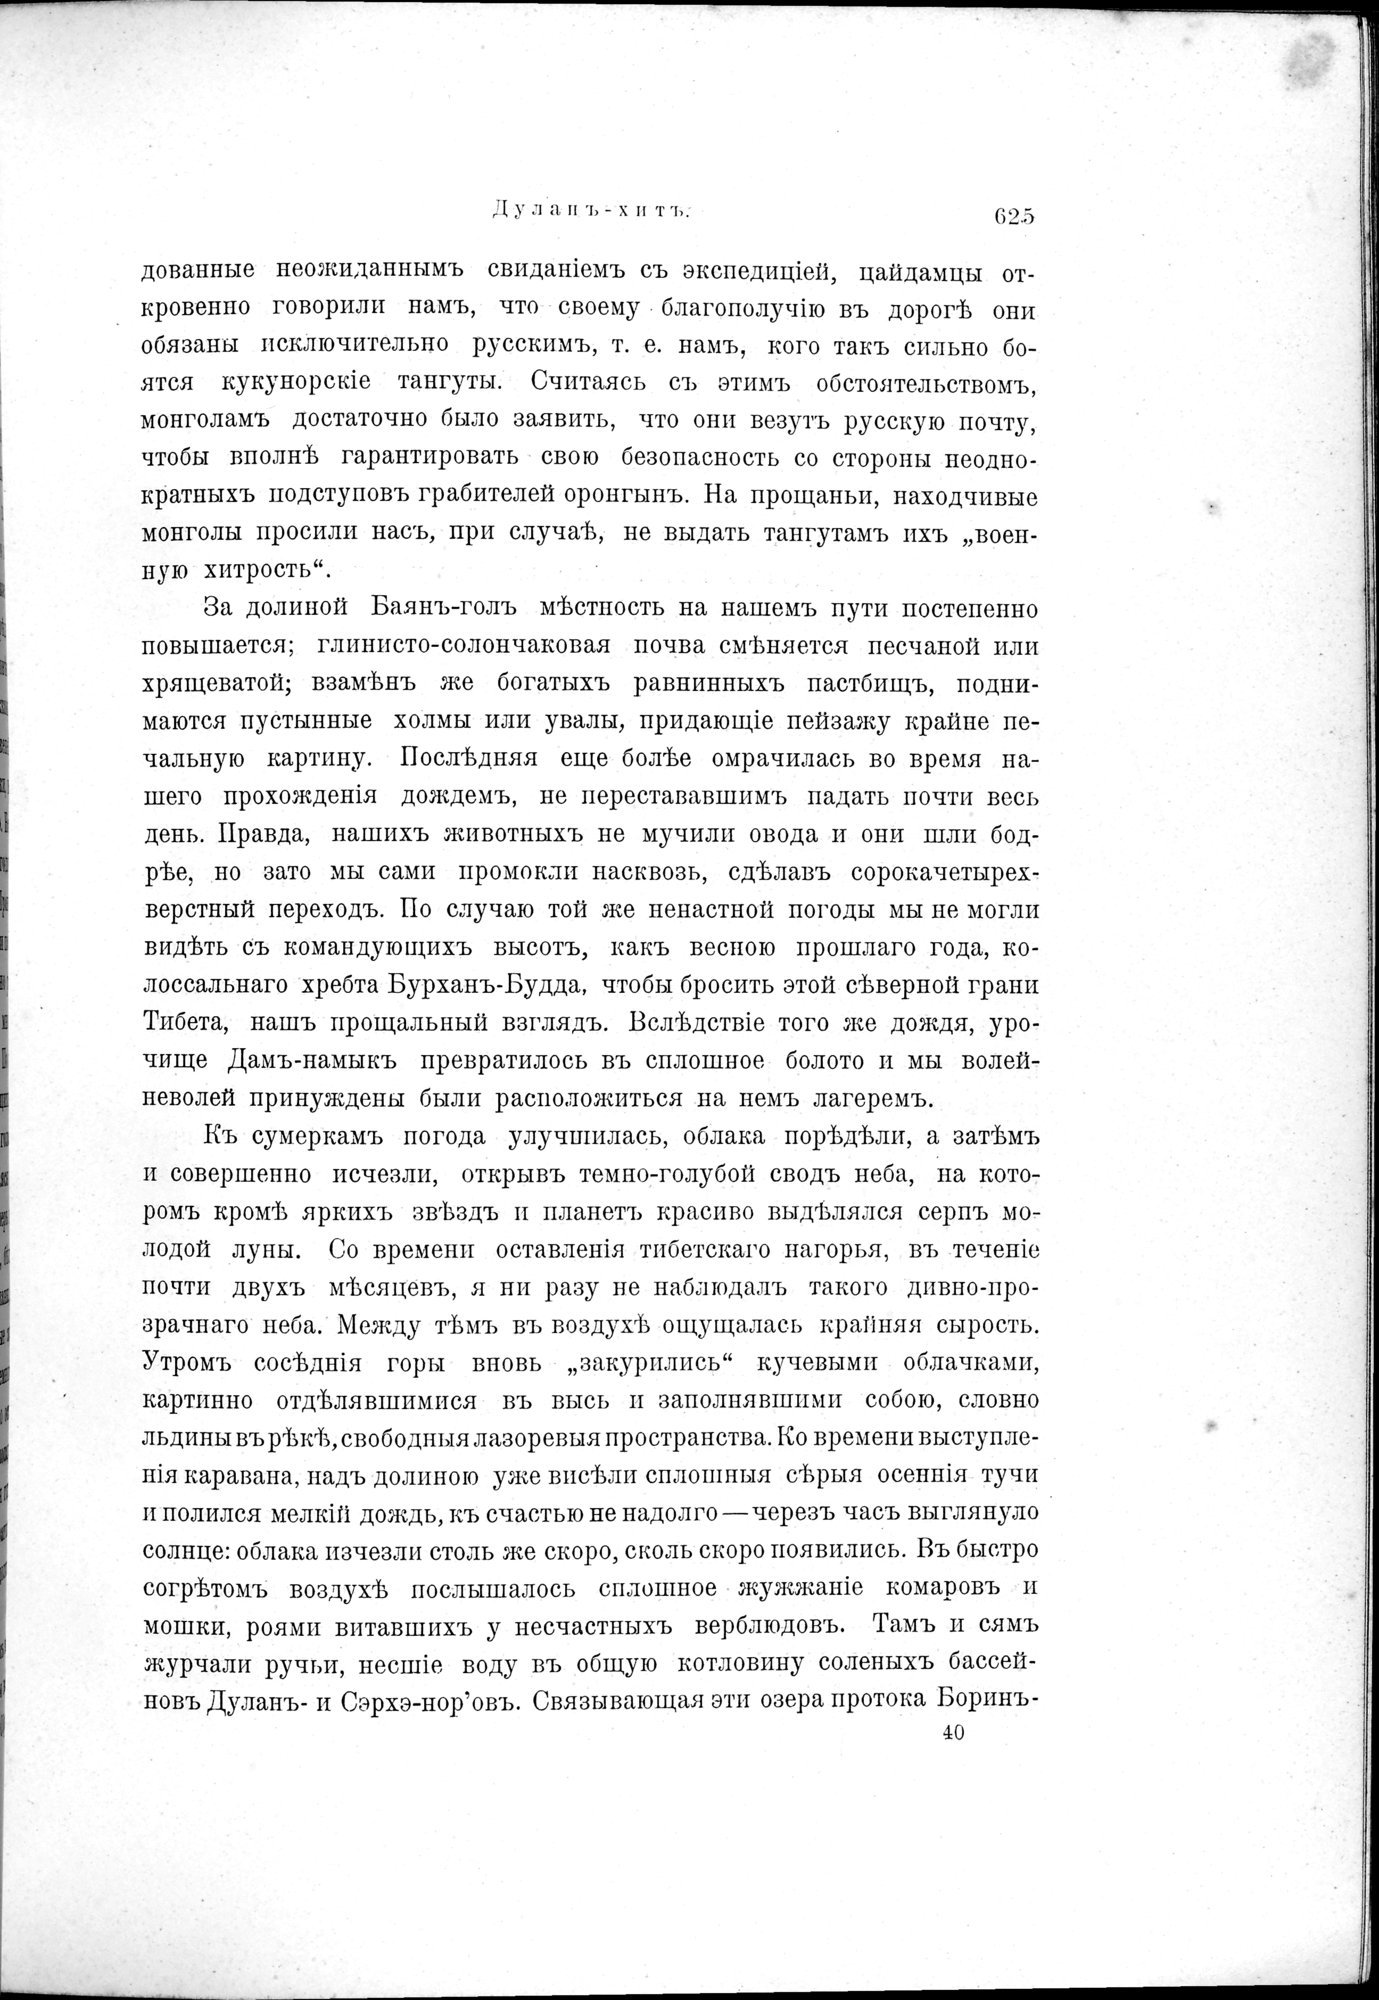 Mongoliia i Kam : vol.2 / Page 453 (Grayscale High Resolution Image)